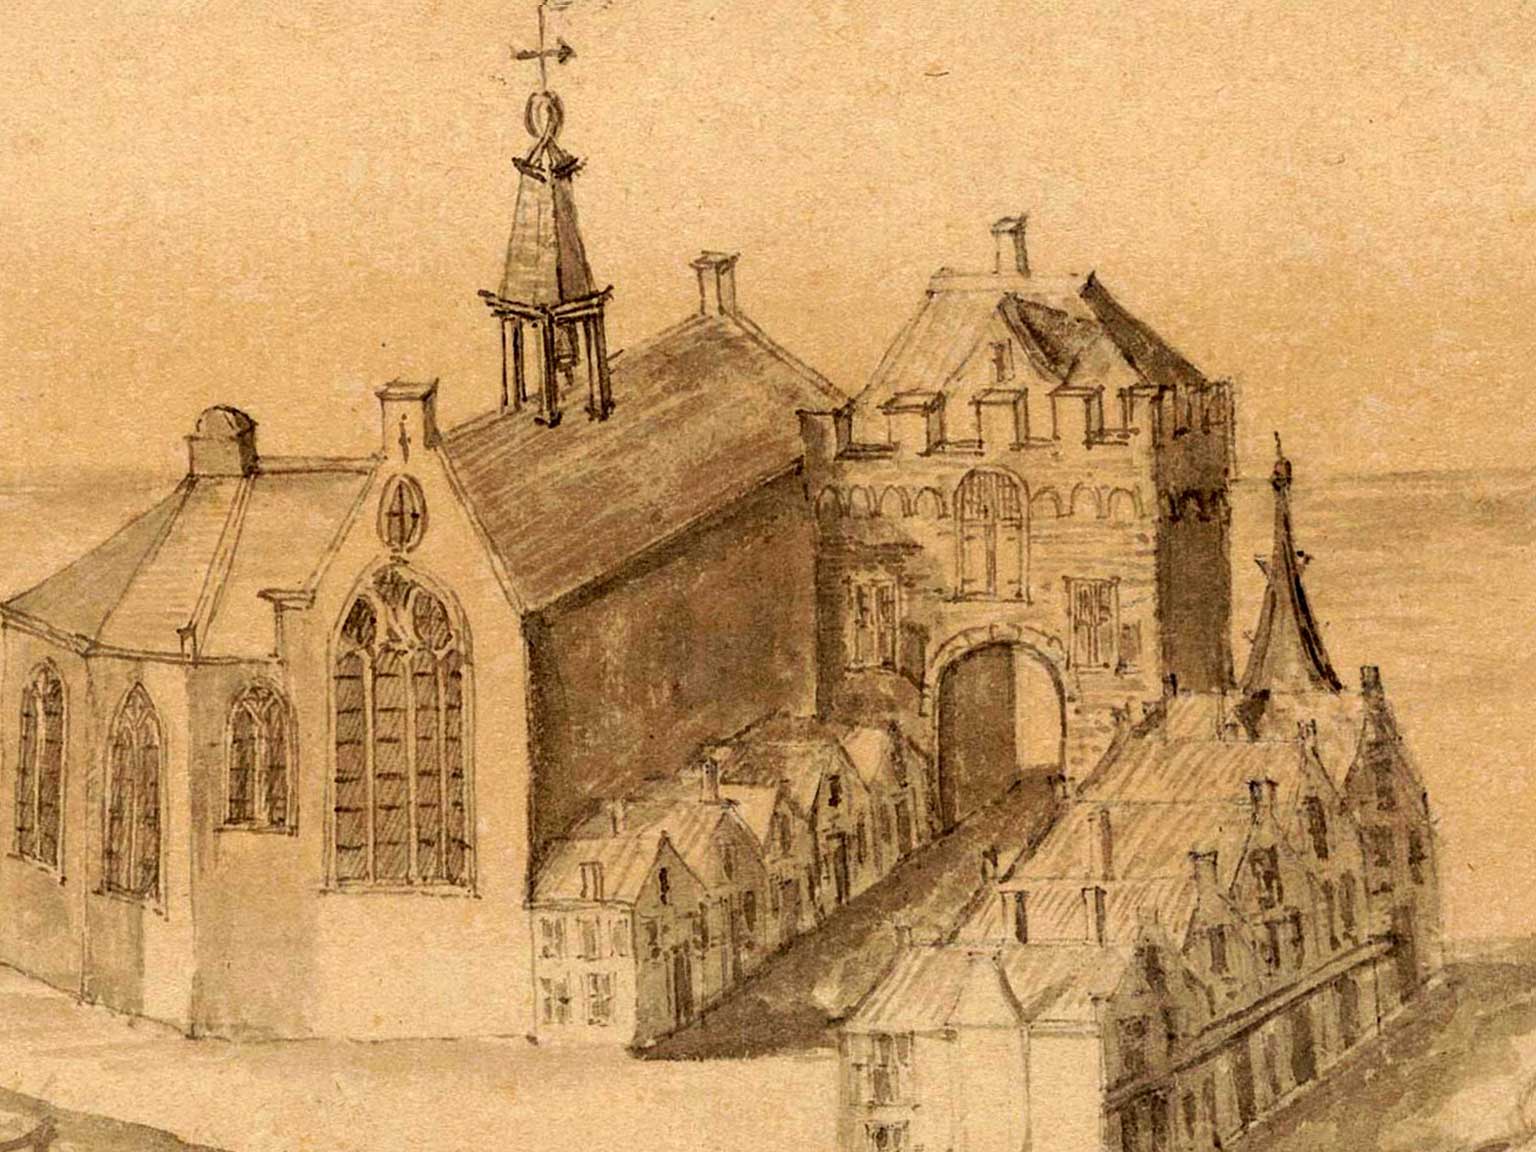 Sint Olofskapel, Amsterdam, with the Sint Olofspoort still intact in 1544